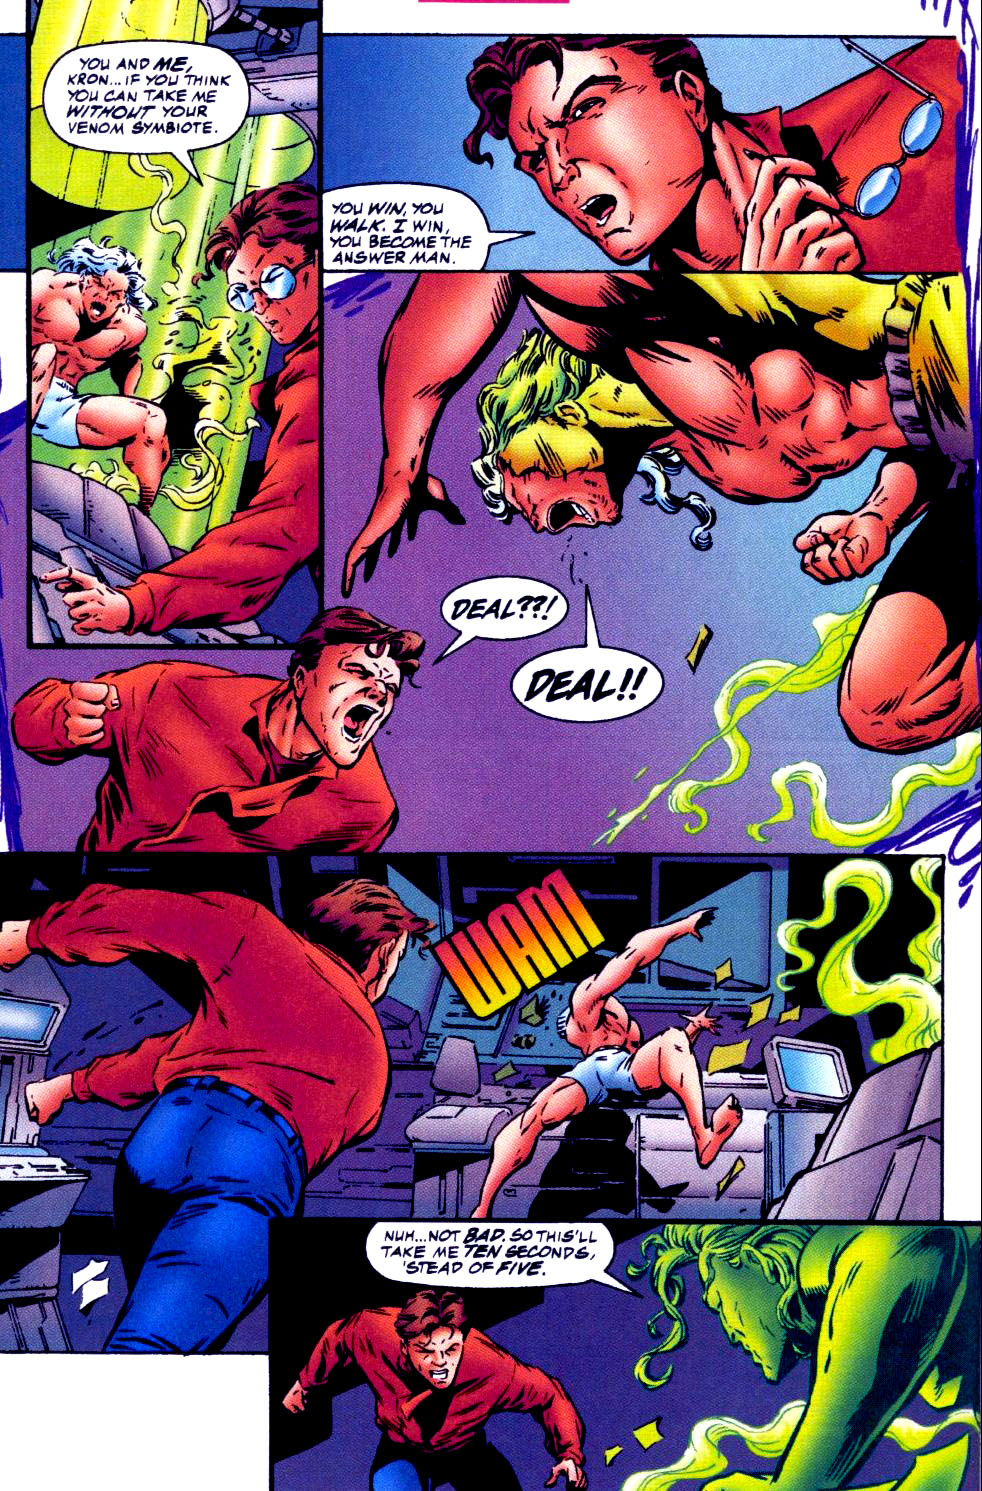 Spider-Man 2099 (1992) issue 39 - Page 5